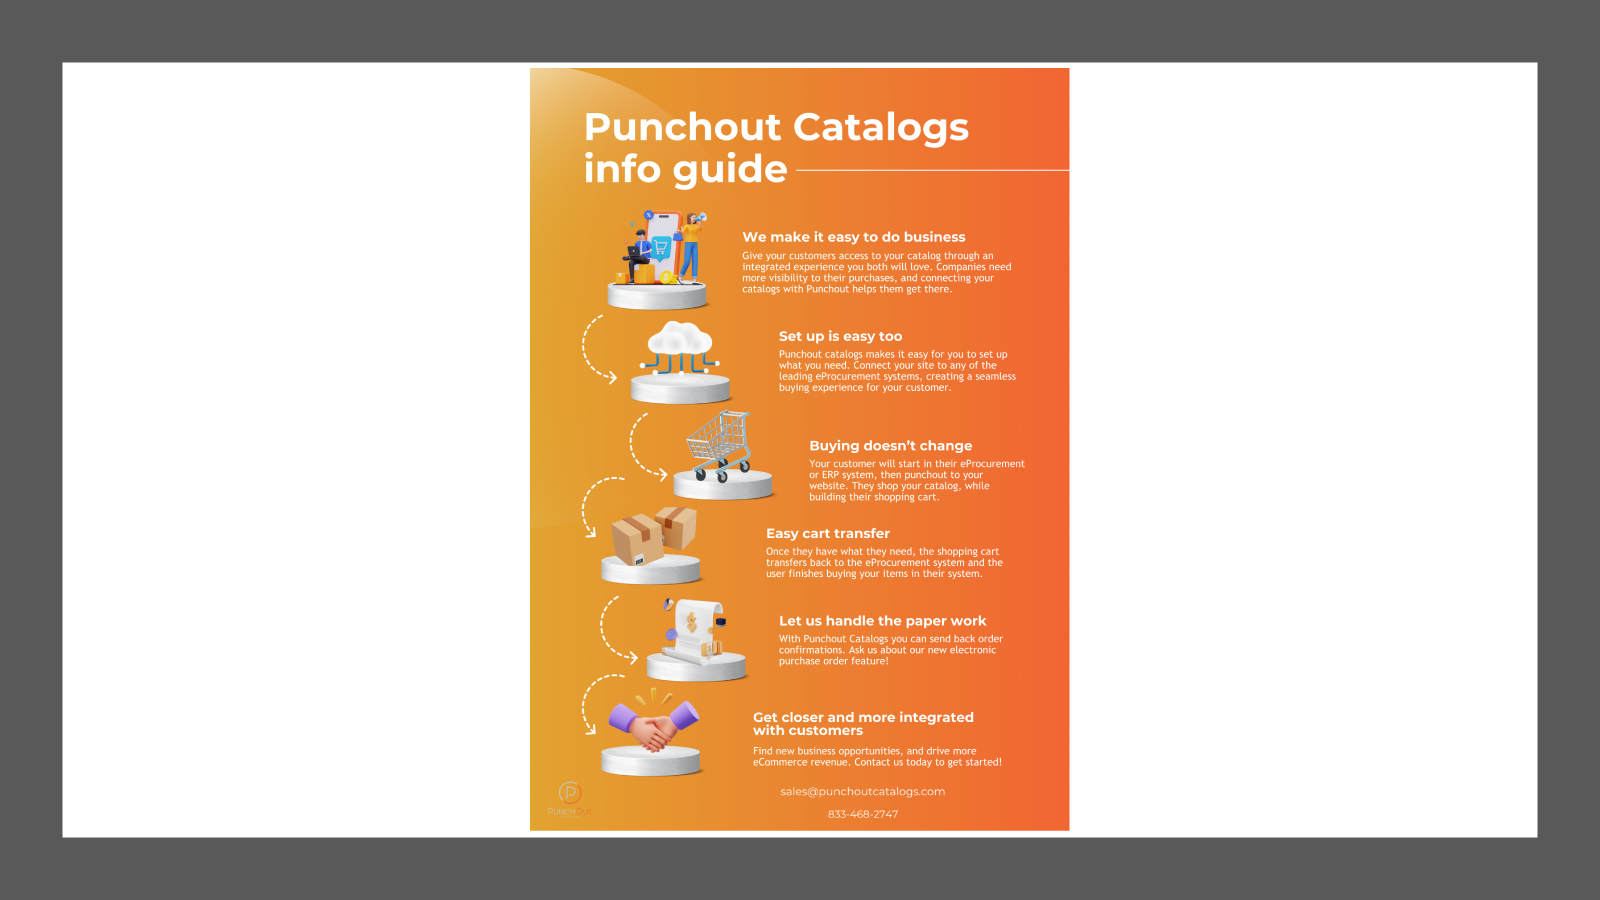 Punchout Catalogs quick info guide